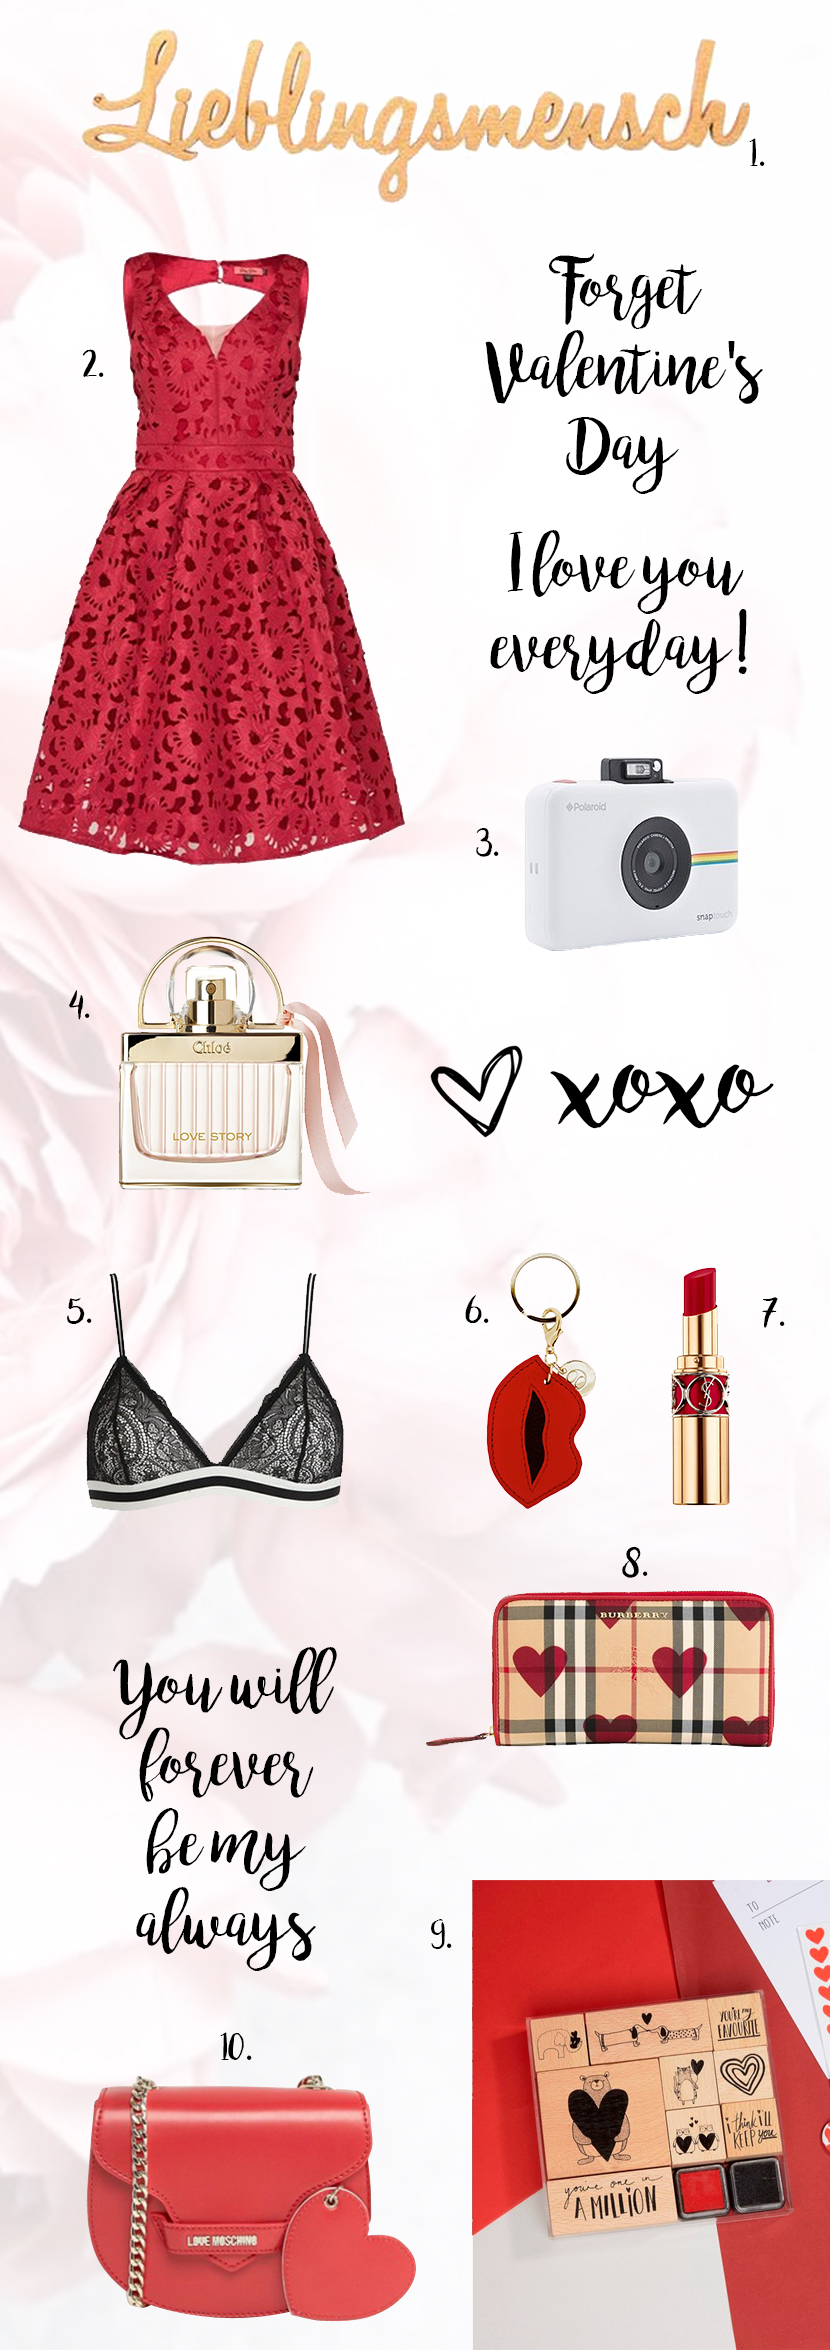 ValentinesDay-10-Reasons-Blog-Belle-Melange-Wishlist-Loved-1